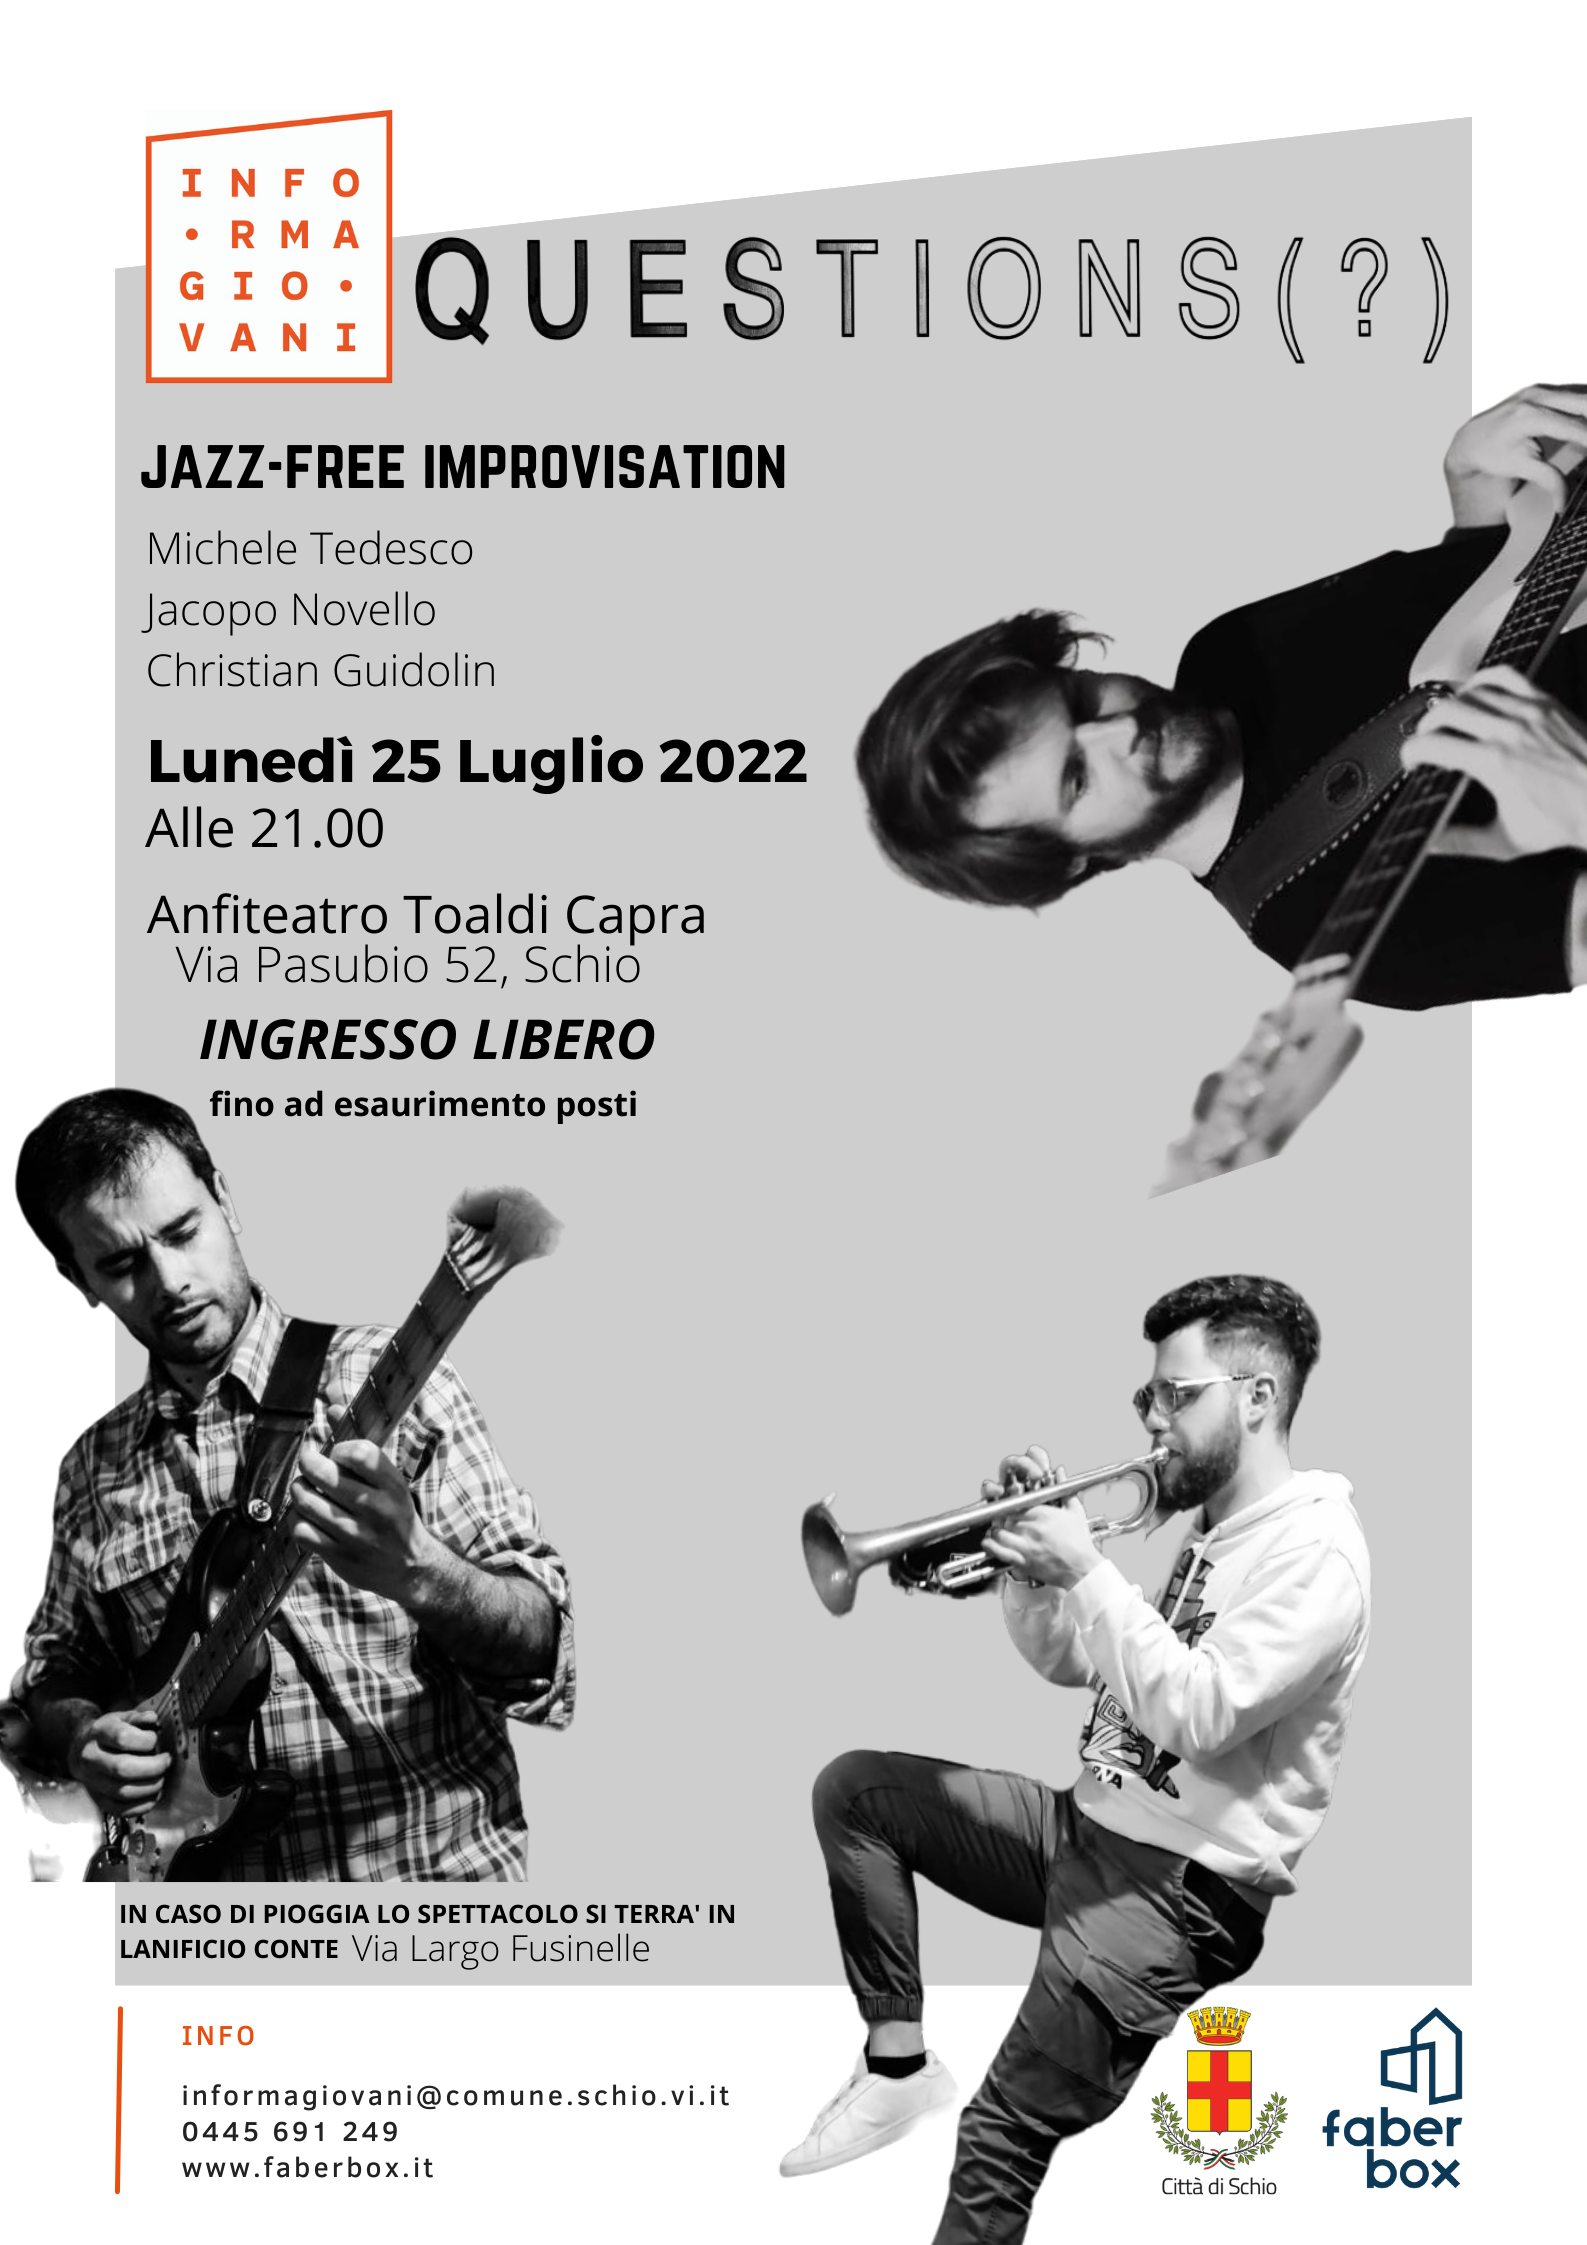 Concerto Jazz “Questions(?) – Jazz and Free Improvisation”